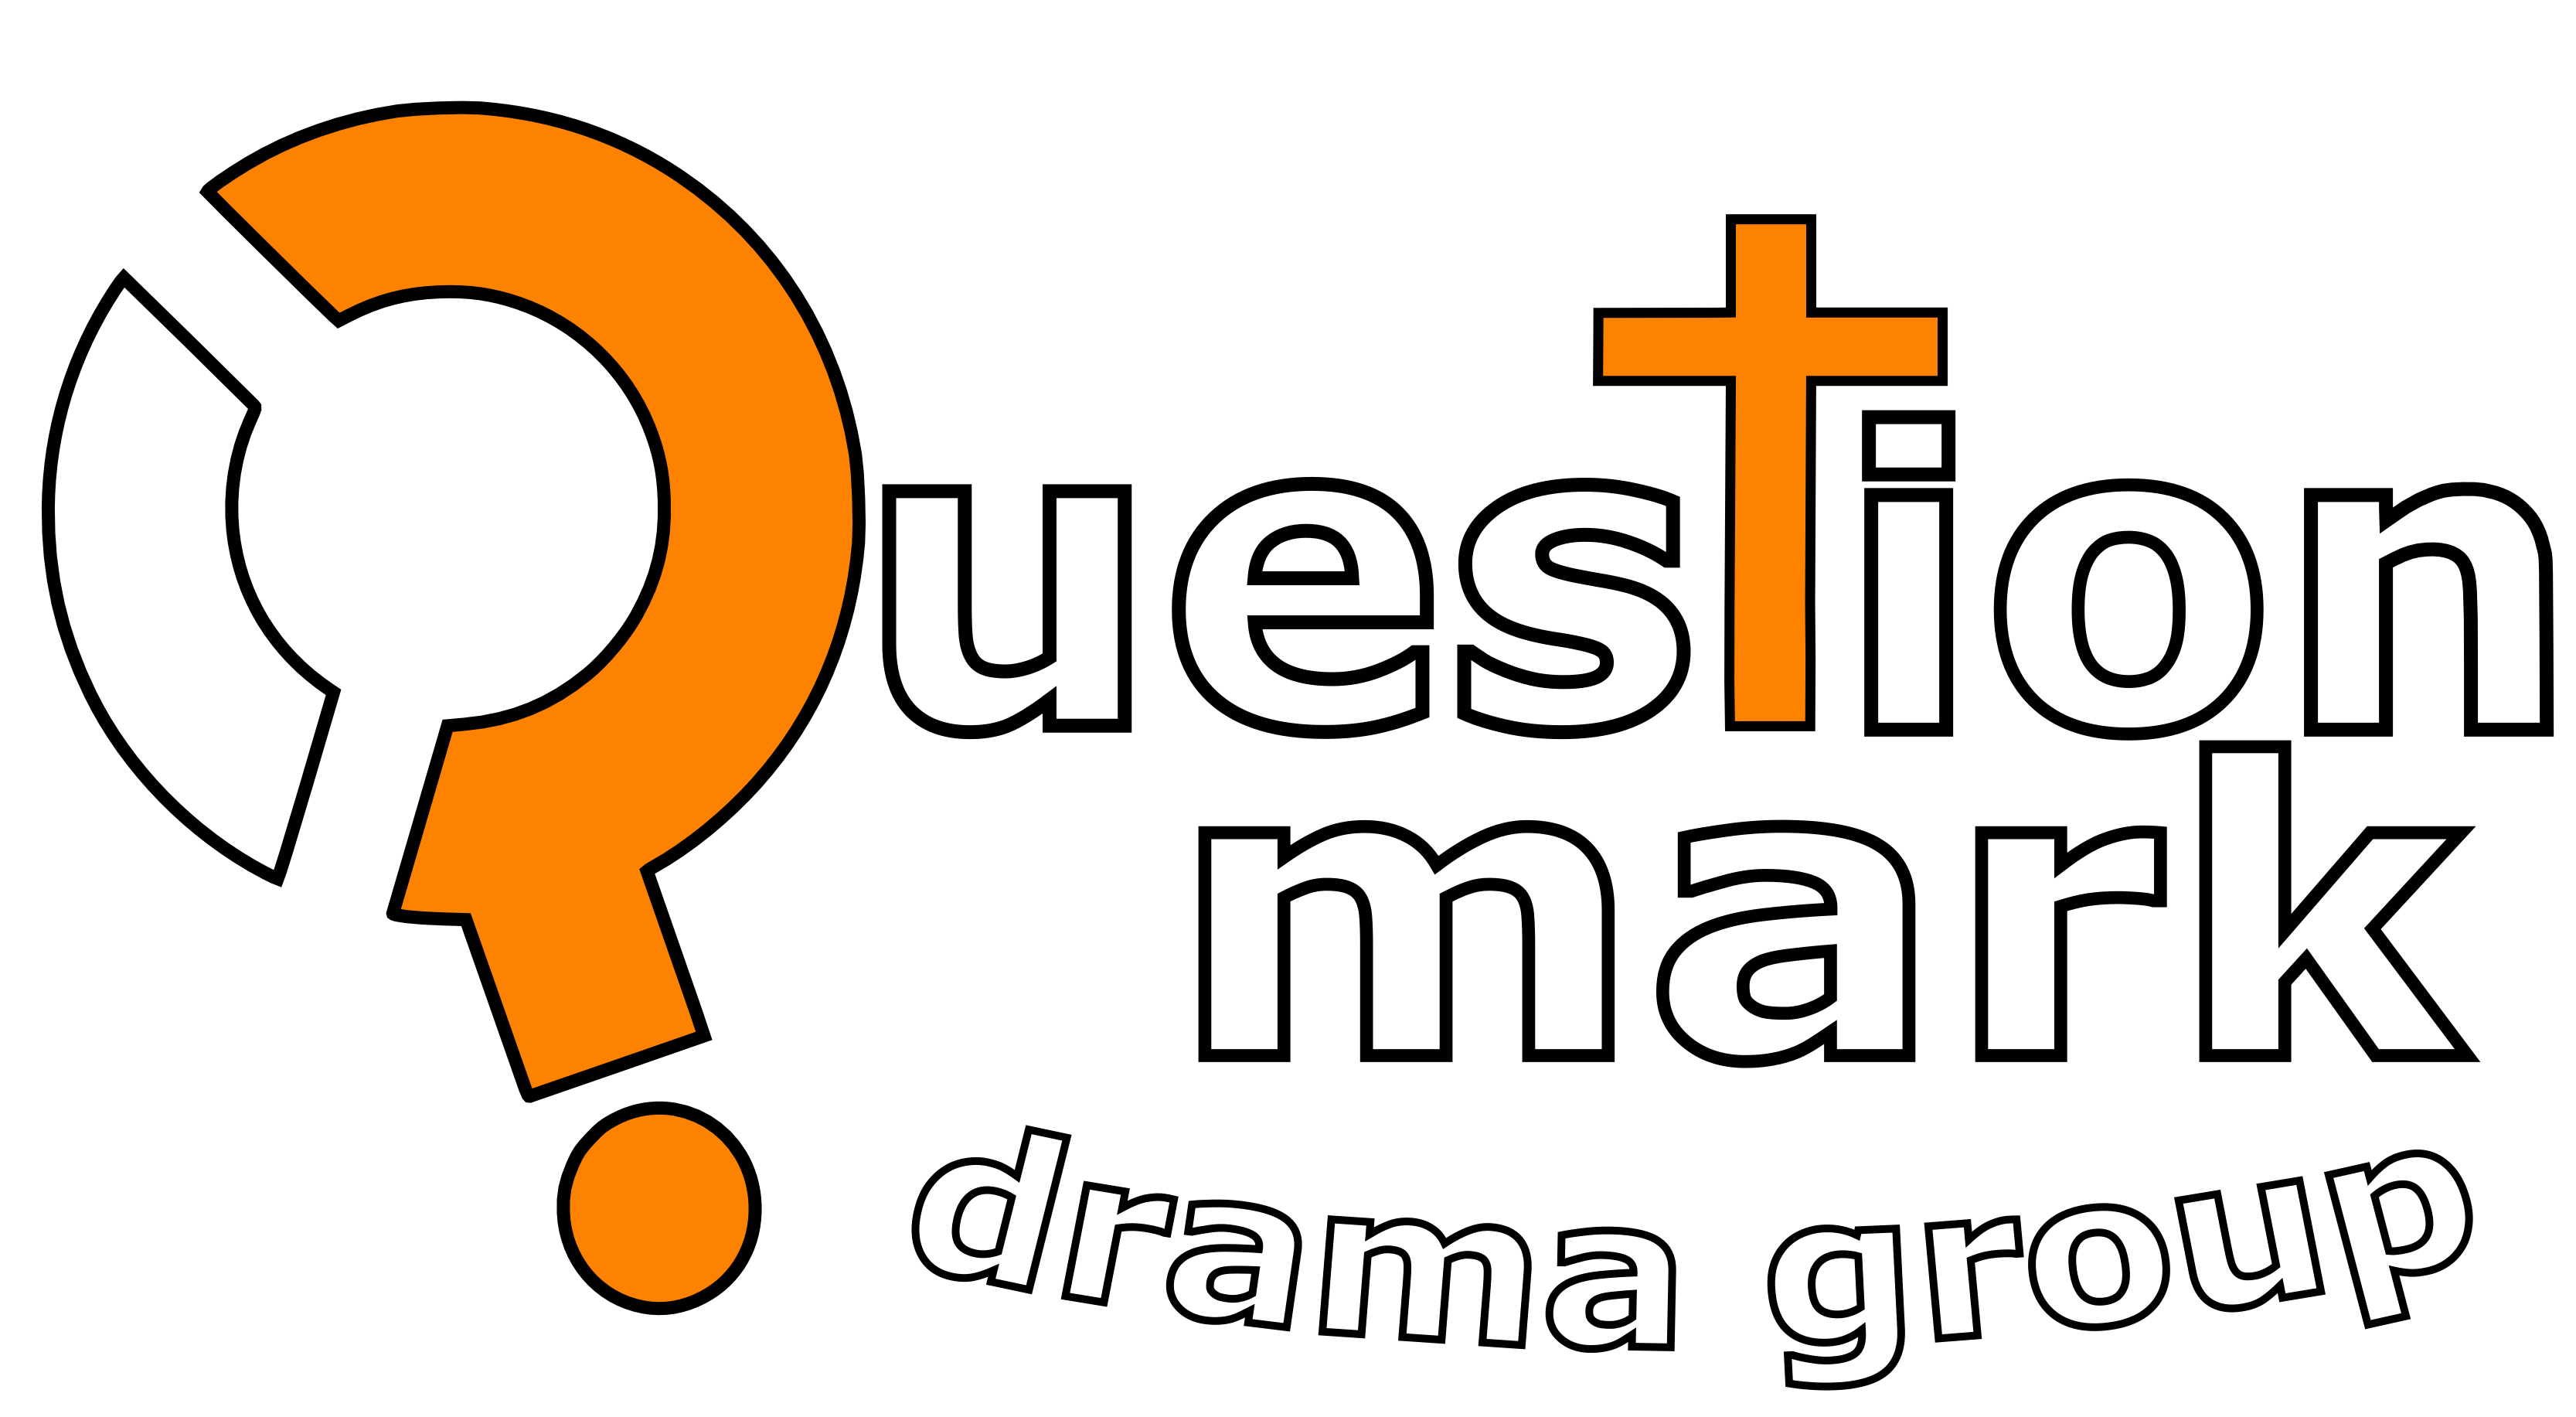 question mark logo final 1 002